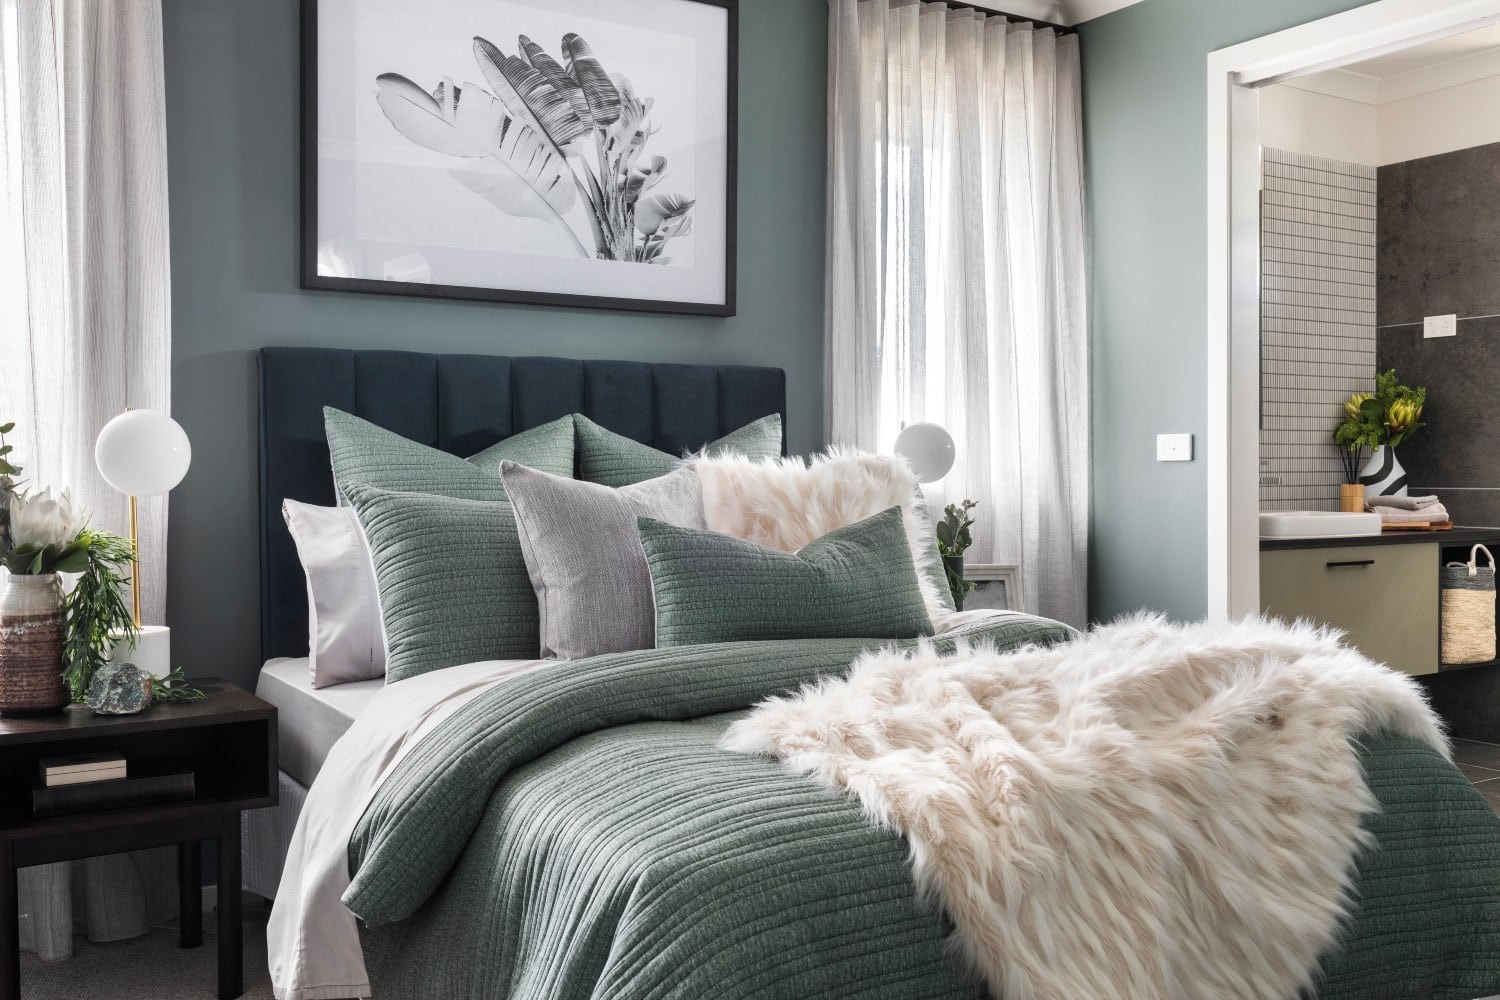 lorraine lea winter bedroom styling dark sage green quilt cover set in teal bedroom sheer curtains